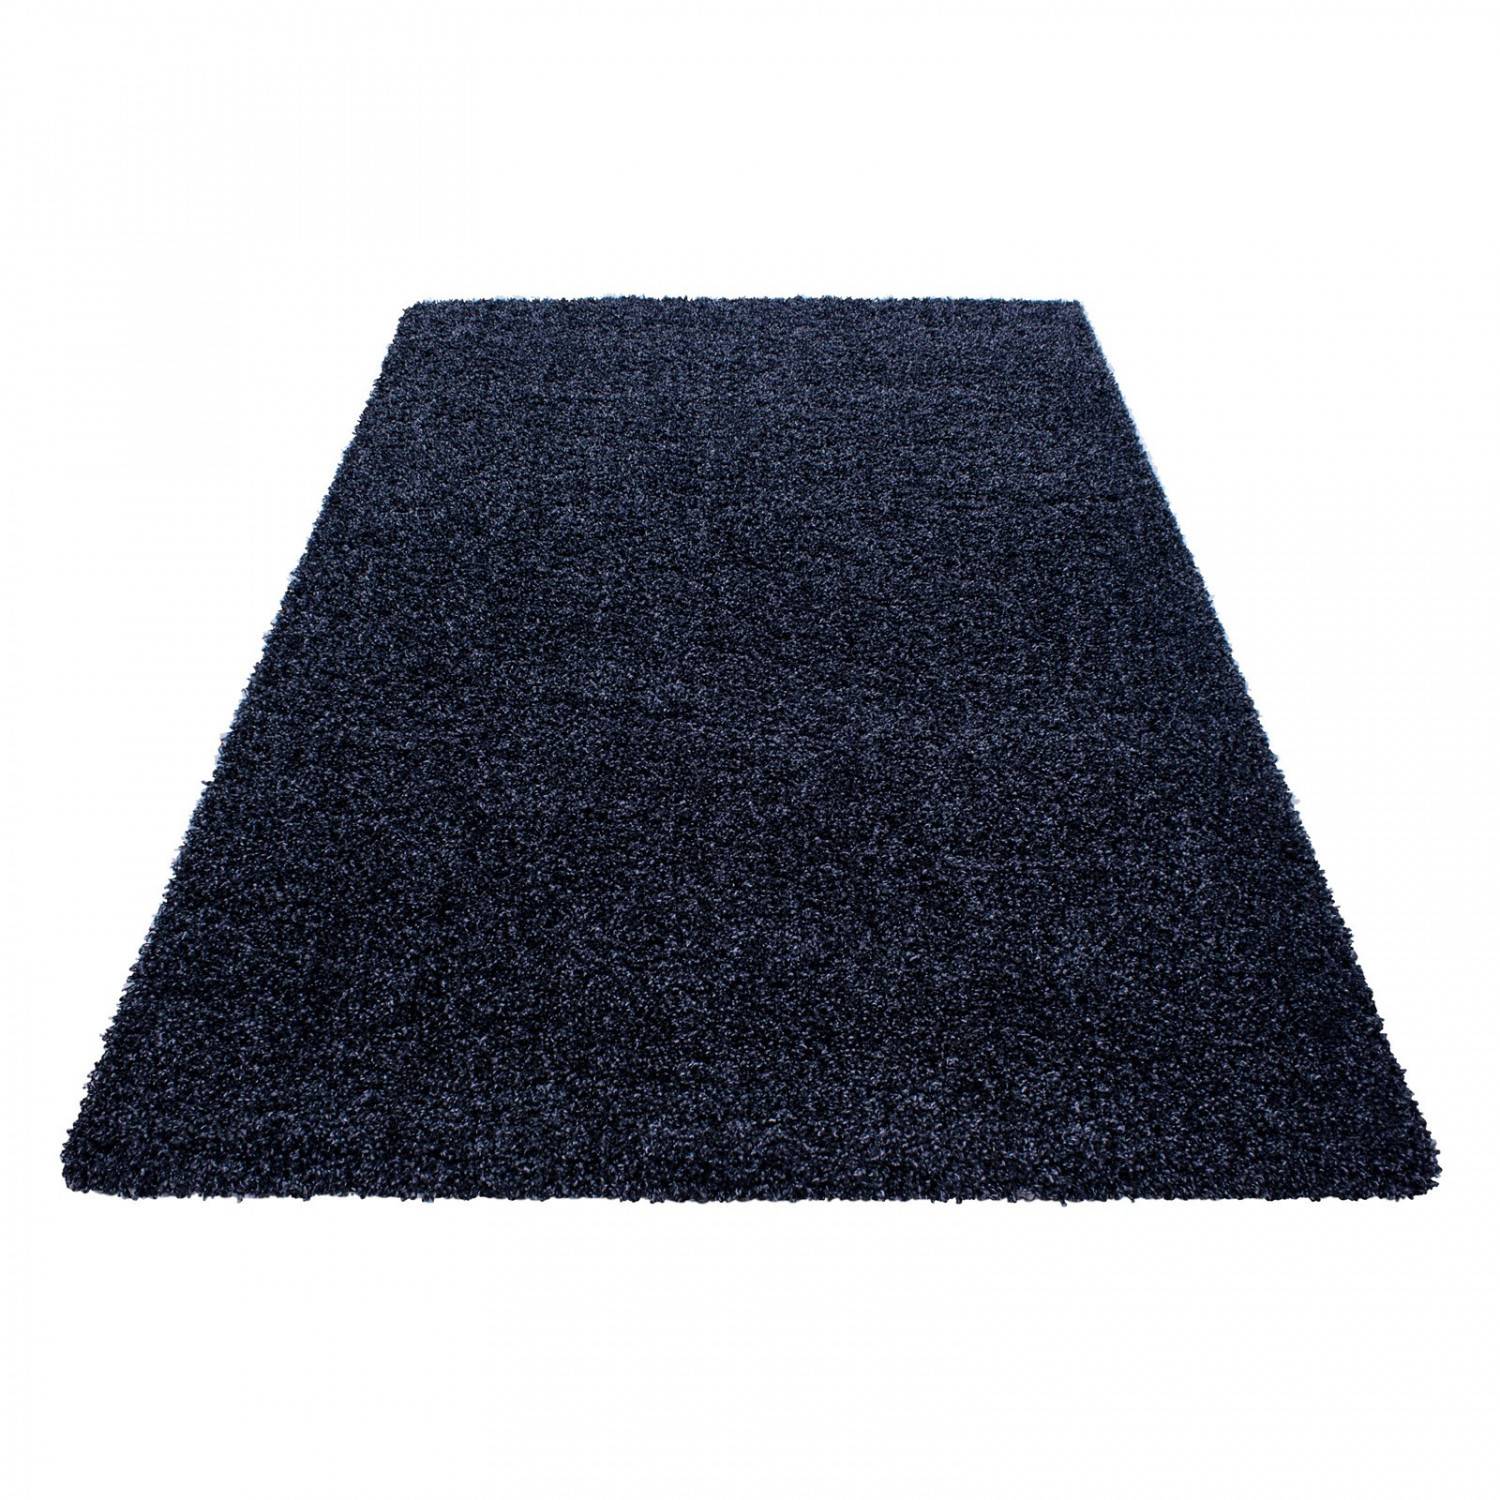 Soros hal tapijt 80x150cm Stof donkerblauw